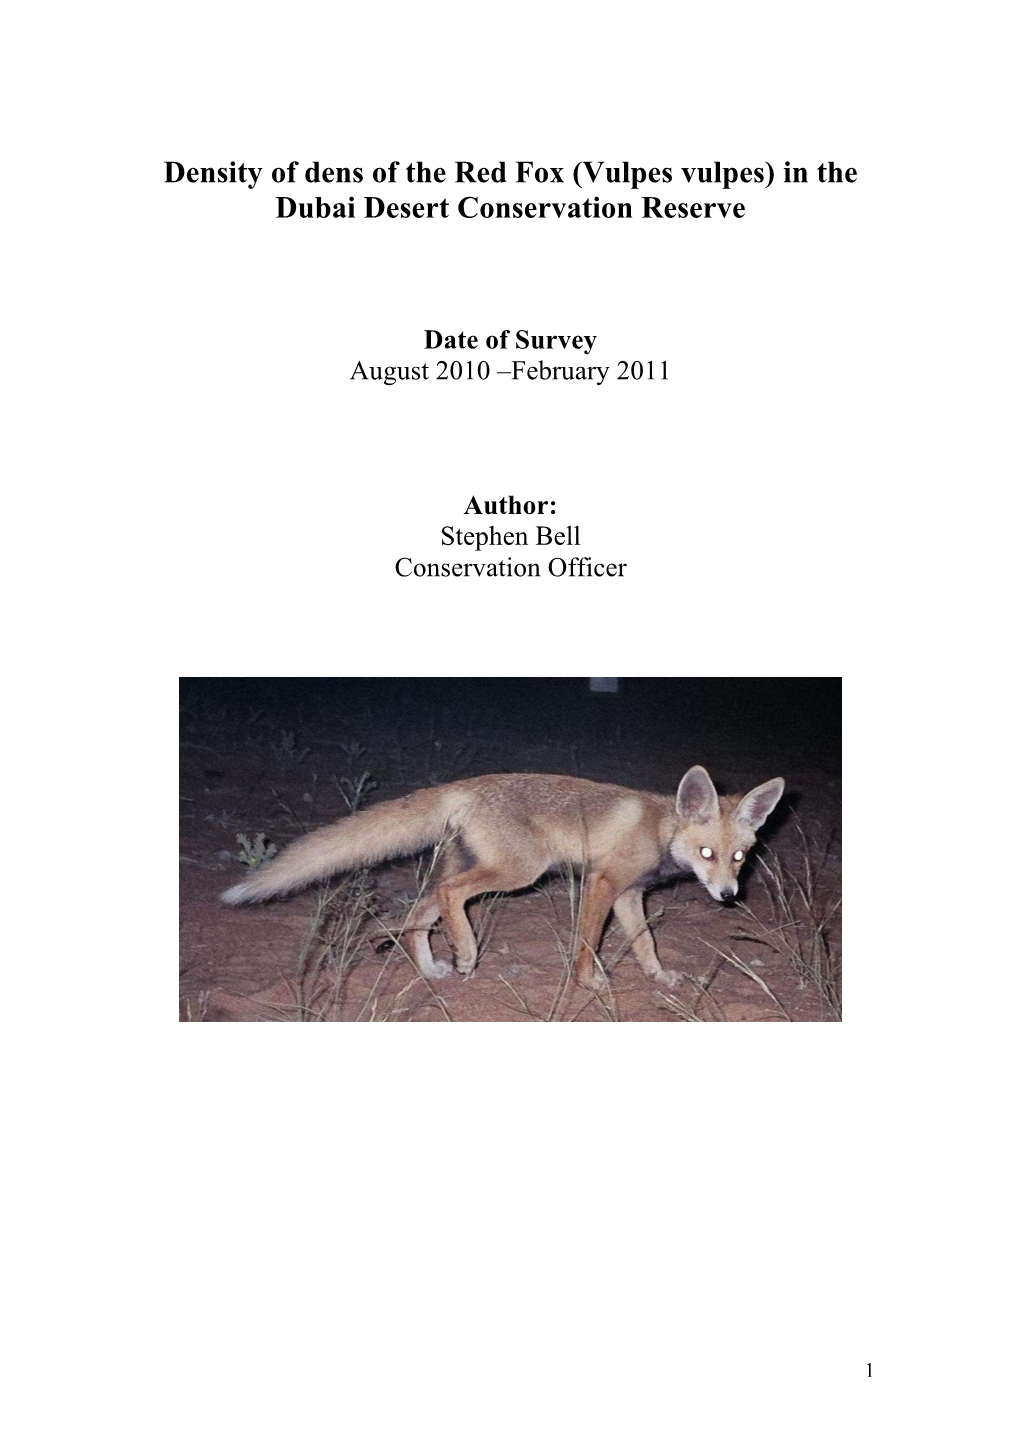 Density of Dens of the Red Fox (Vulpes Vulpes) in the Dubai Desert Conservation Reserve